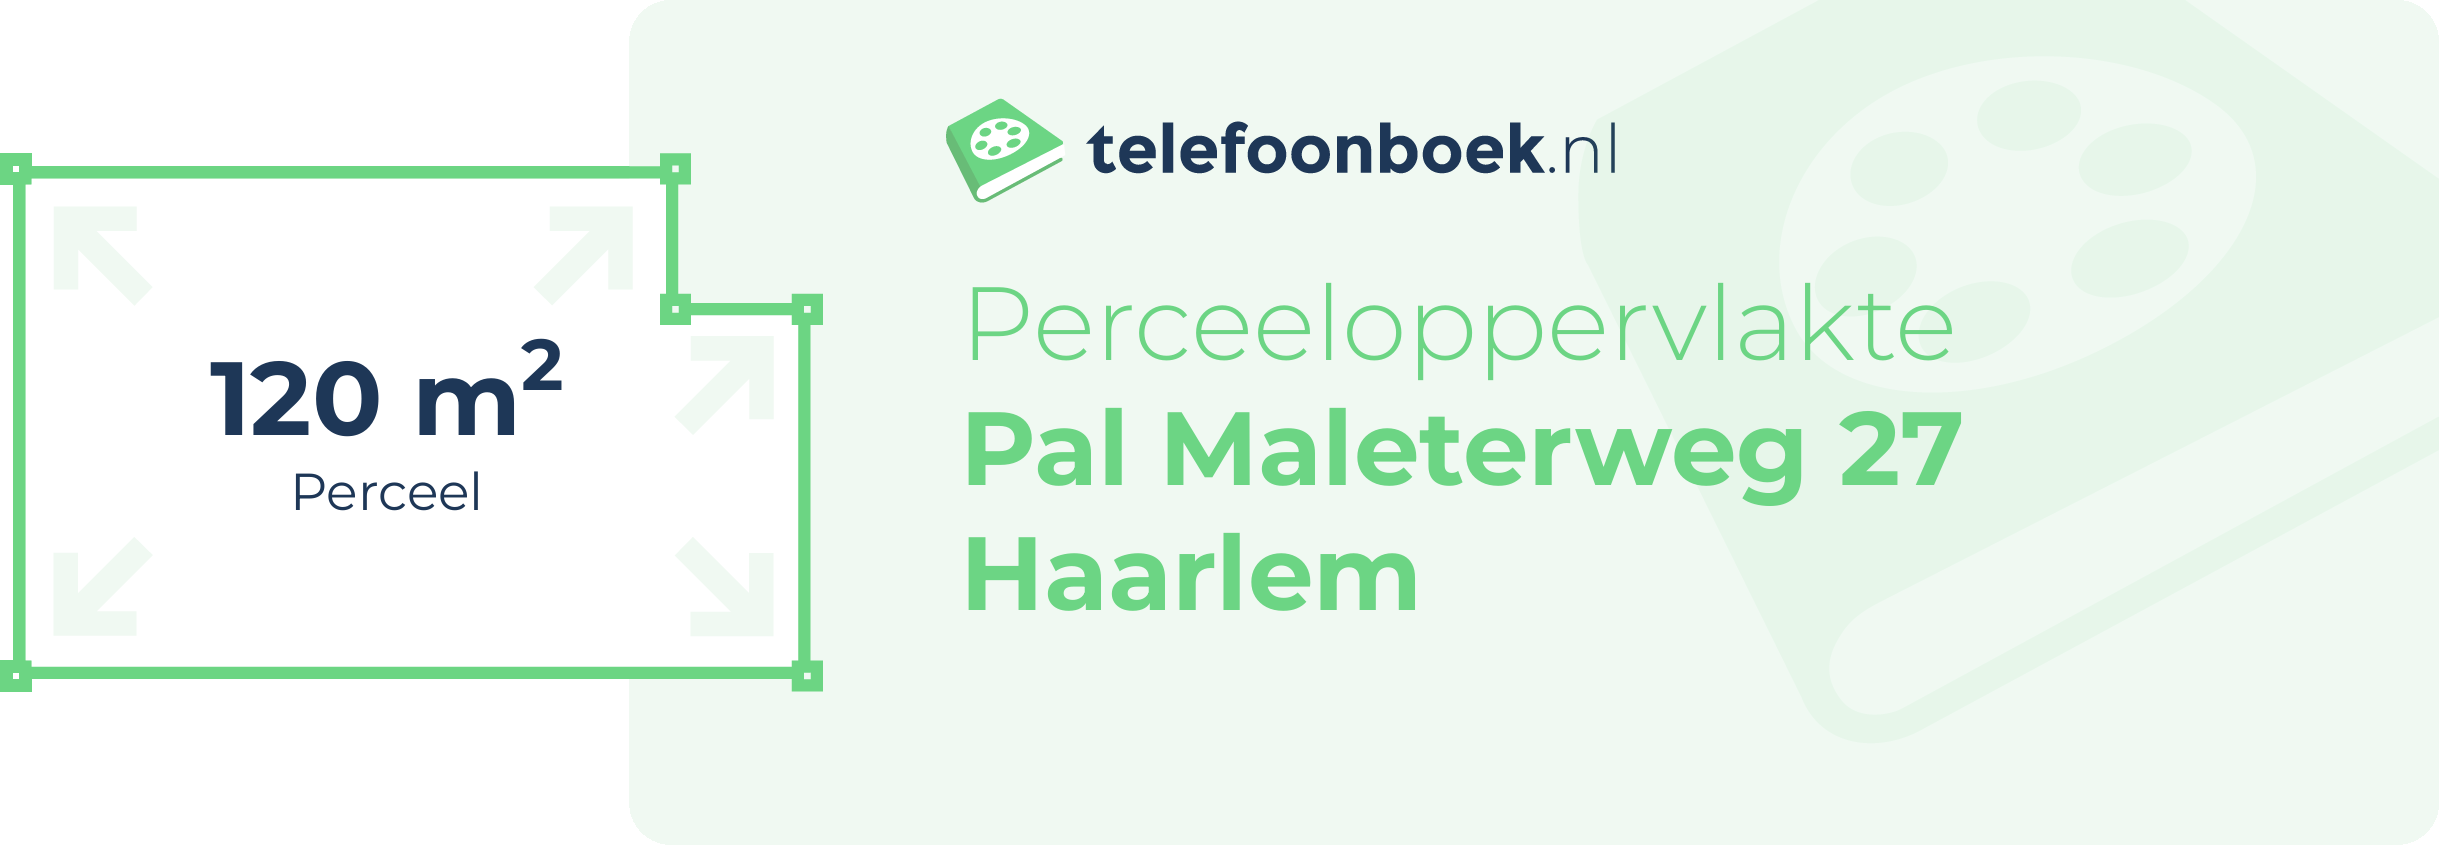 Perceeloppervlakte Pal Maleterweg 27 Haarlem